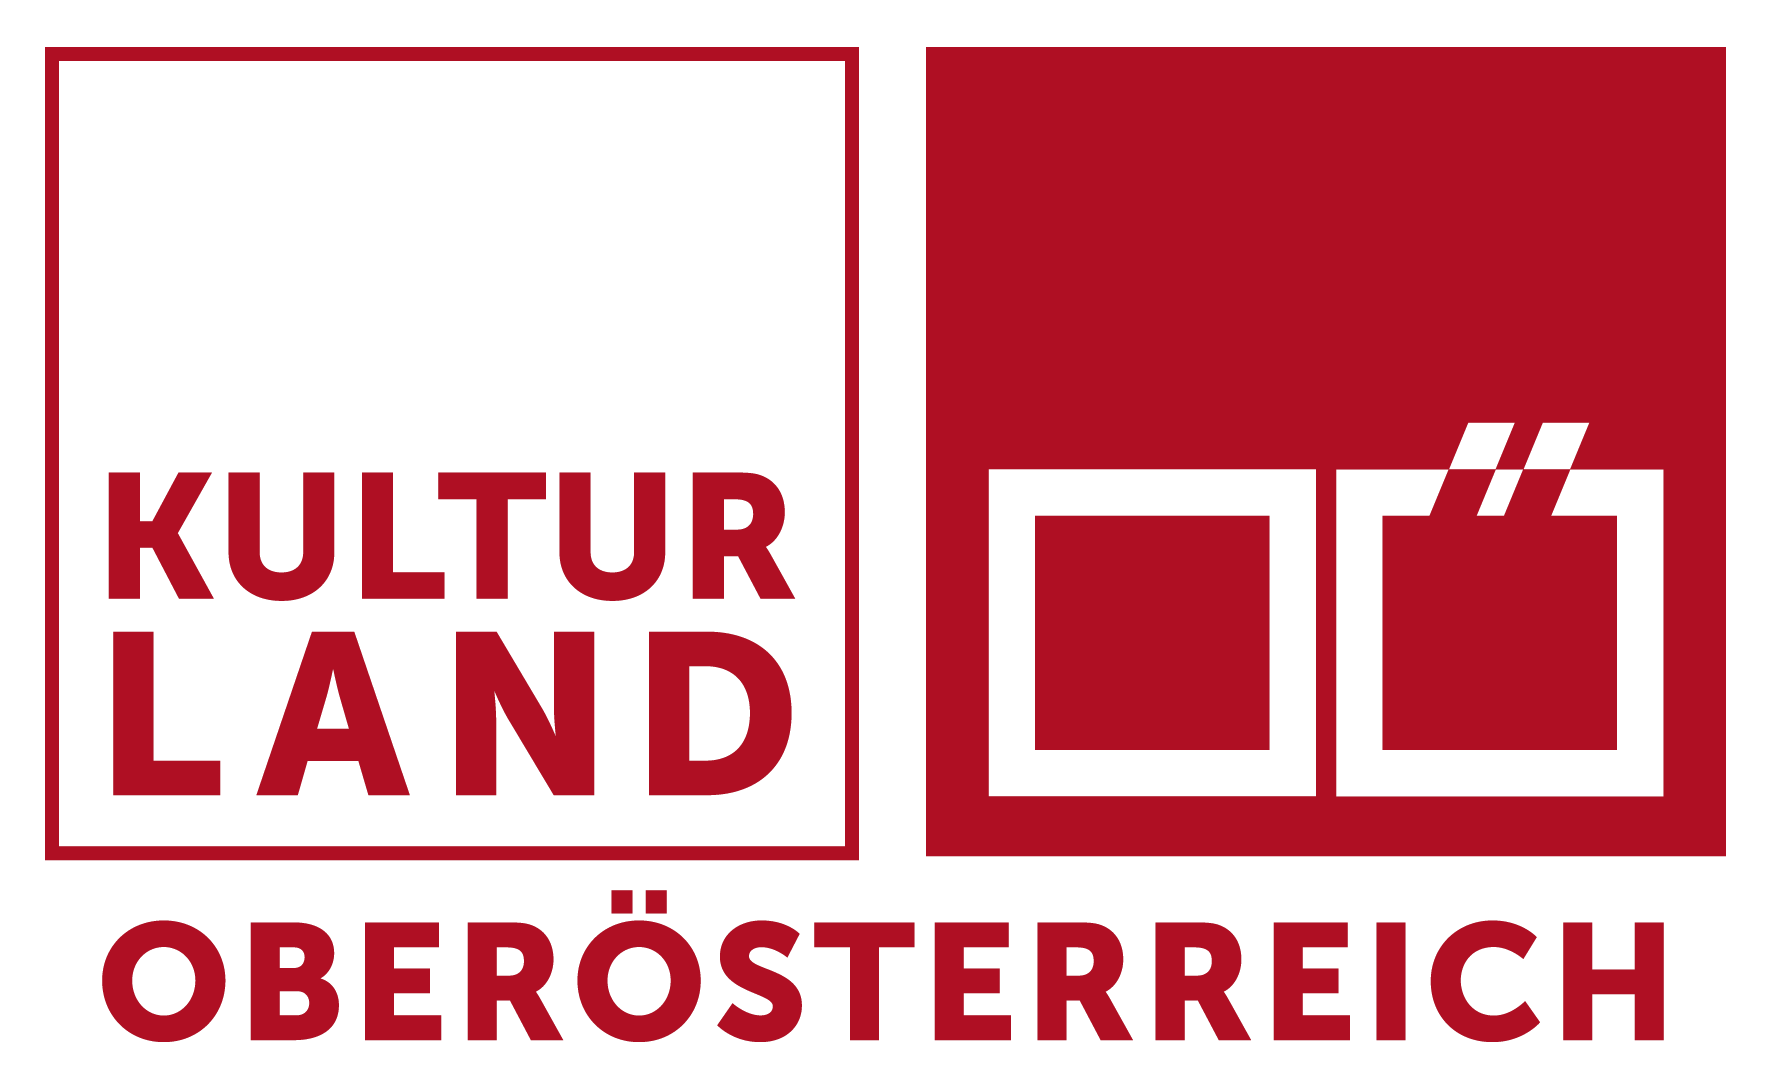 KulturLandLogo.png logo